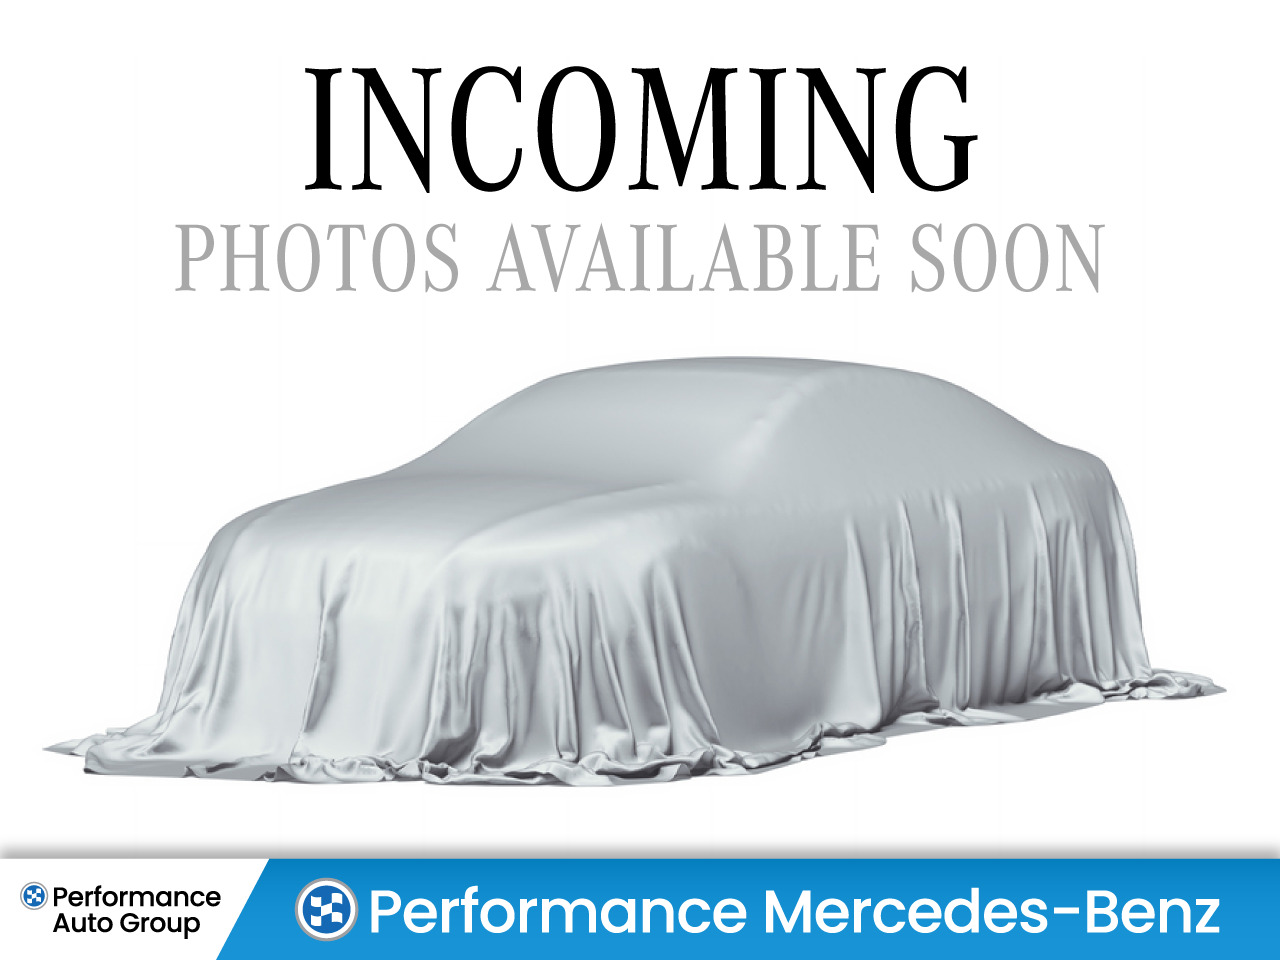 2019 Mercedes-Benz GLE43 AMG SUV | SUNROOF | 360 CAM | HITCH | 21"S